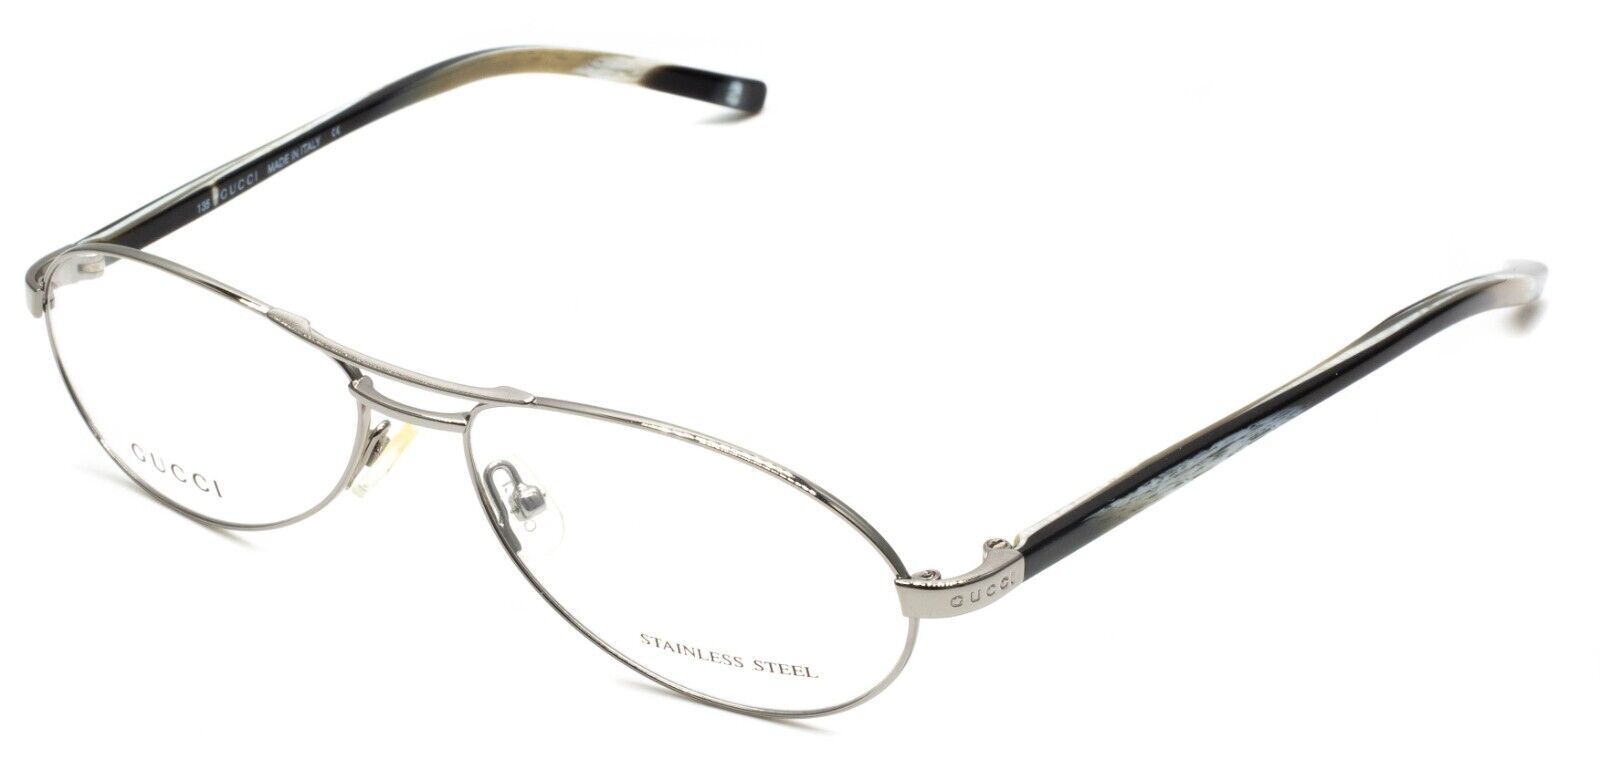 LEVI'S LV 1018 086 52mm Glasses RX Optical Eyewear Frames Eyeglasses - New  BNIB - GGV Eyewear